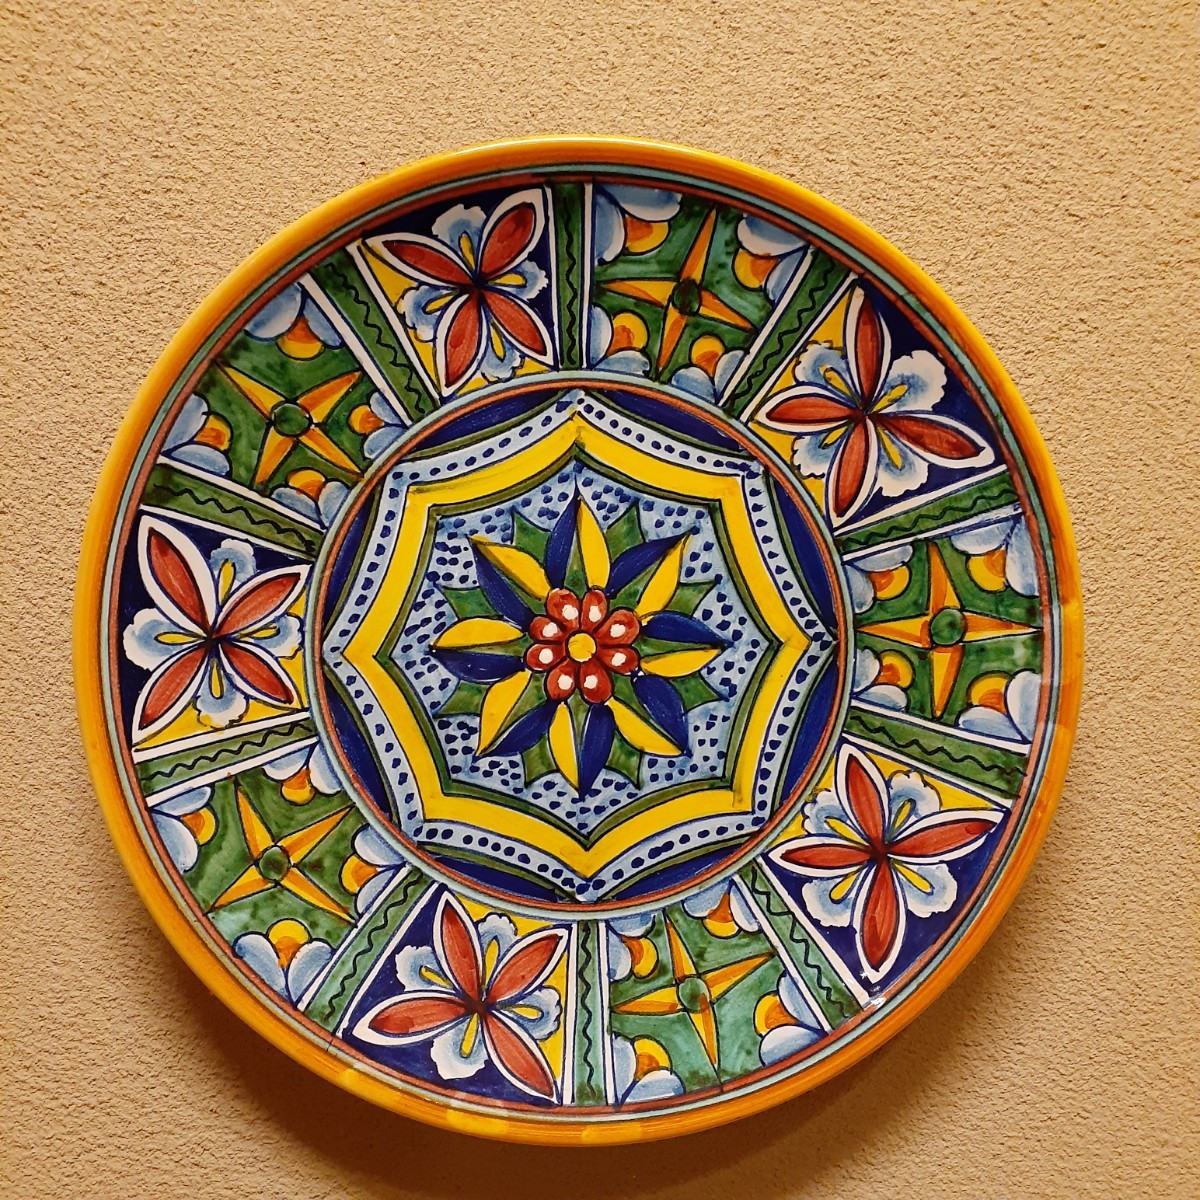  Dell -taDERUTA decoration plate ornament approximately 26cm×3.4cm